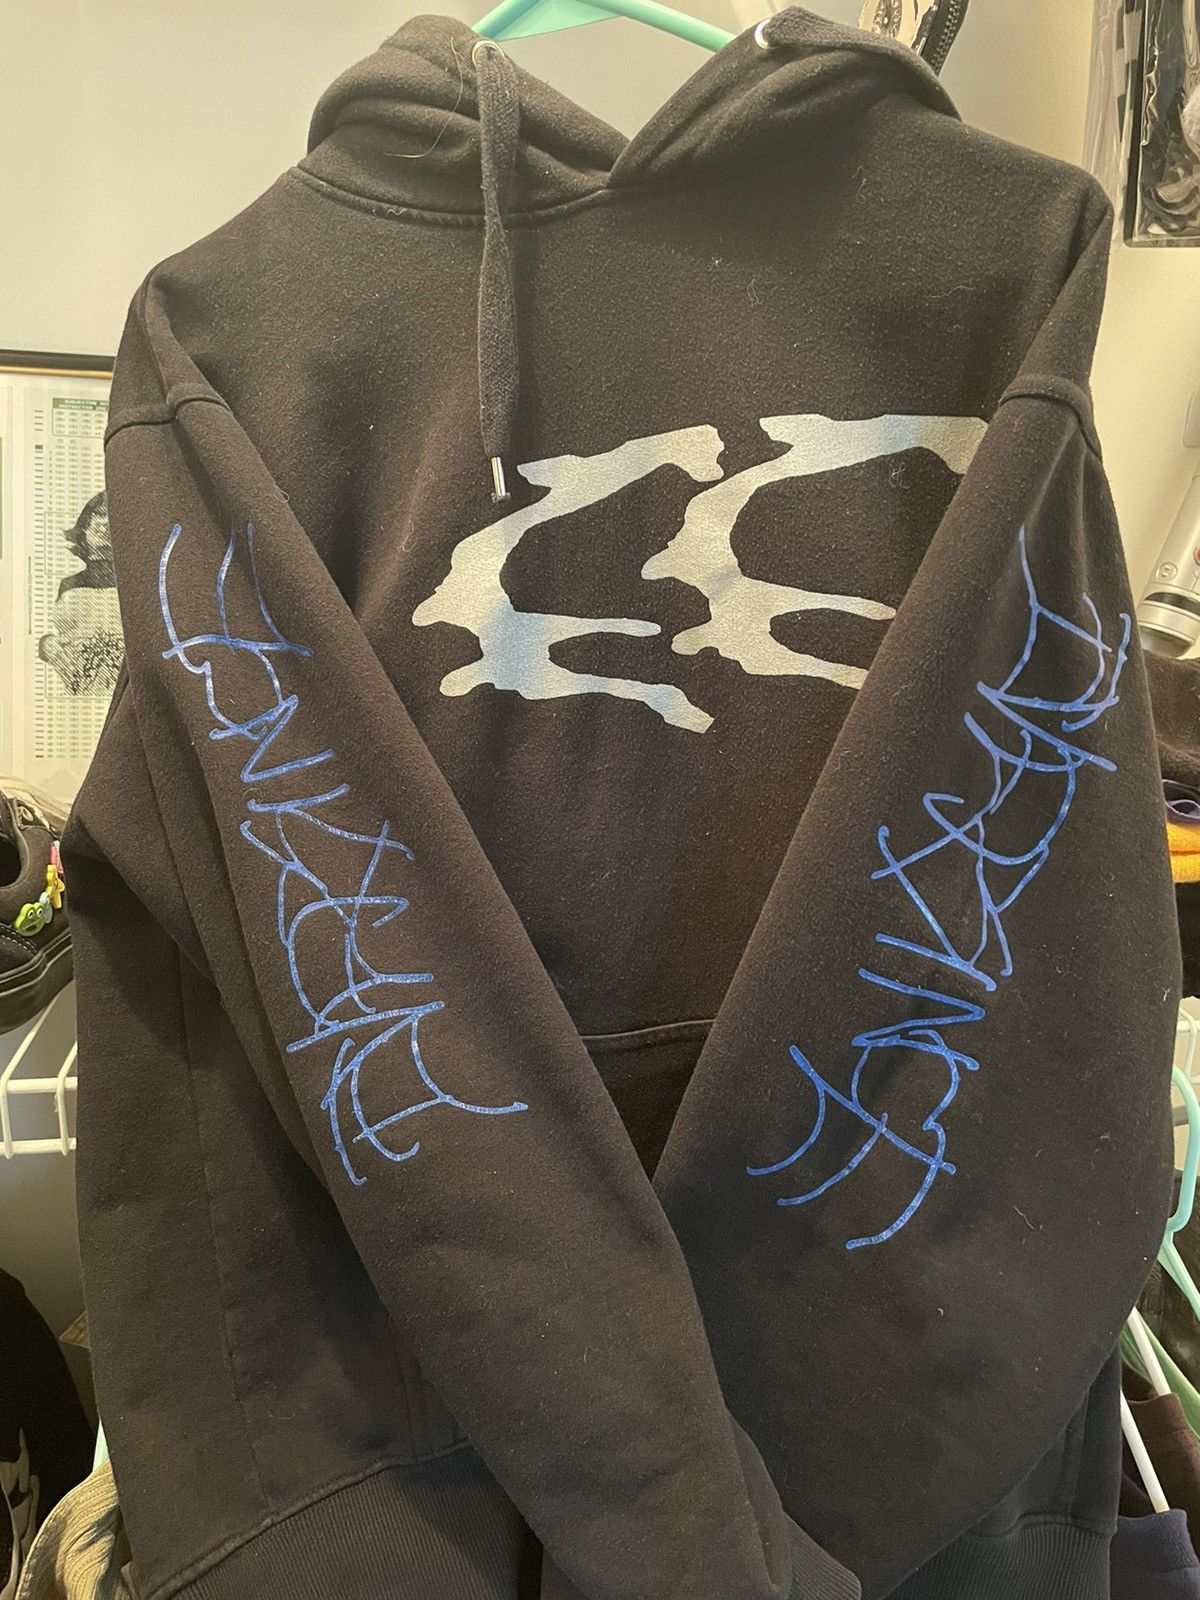 Drain Gang Bladee Eversince hoodie | Grailed